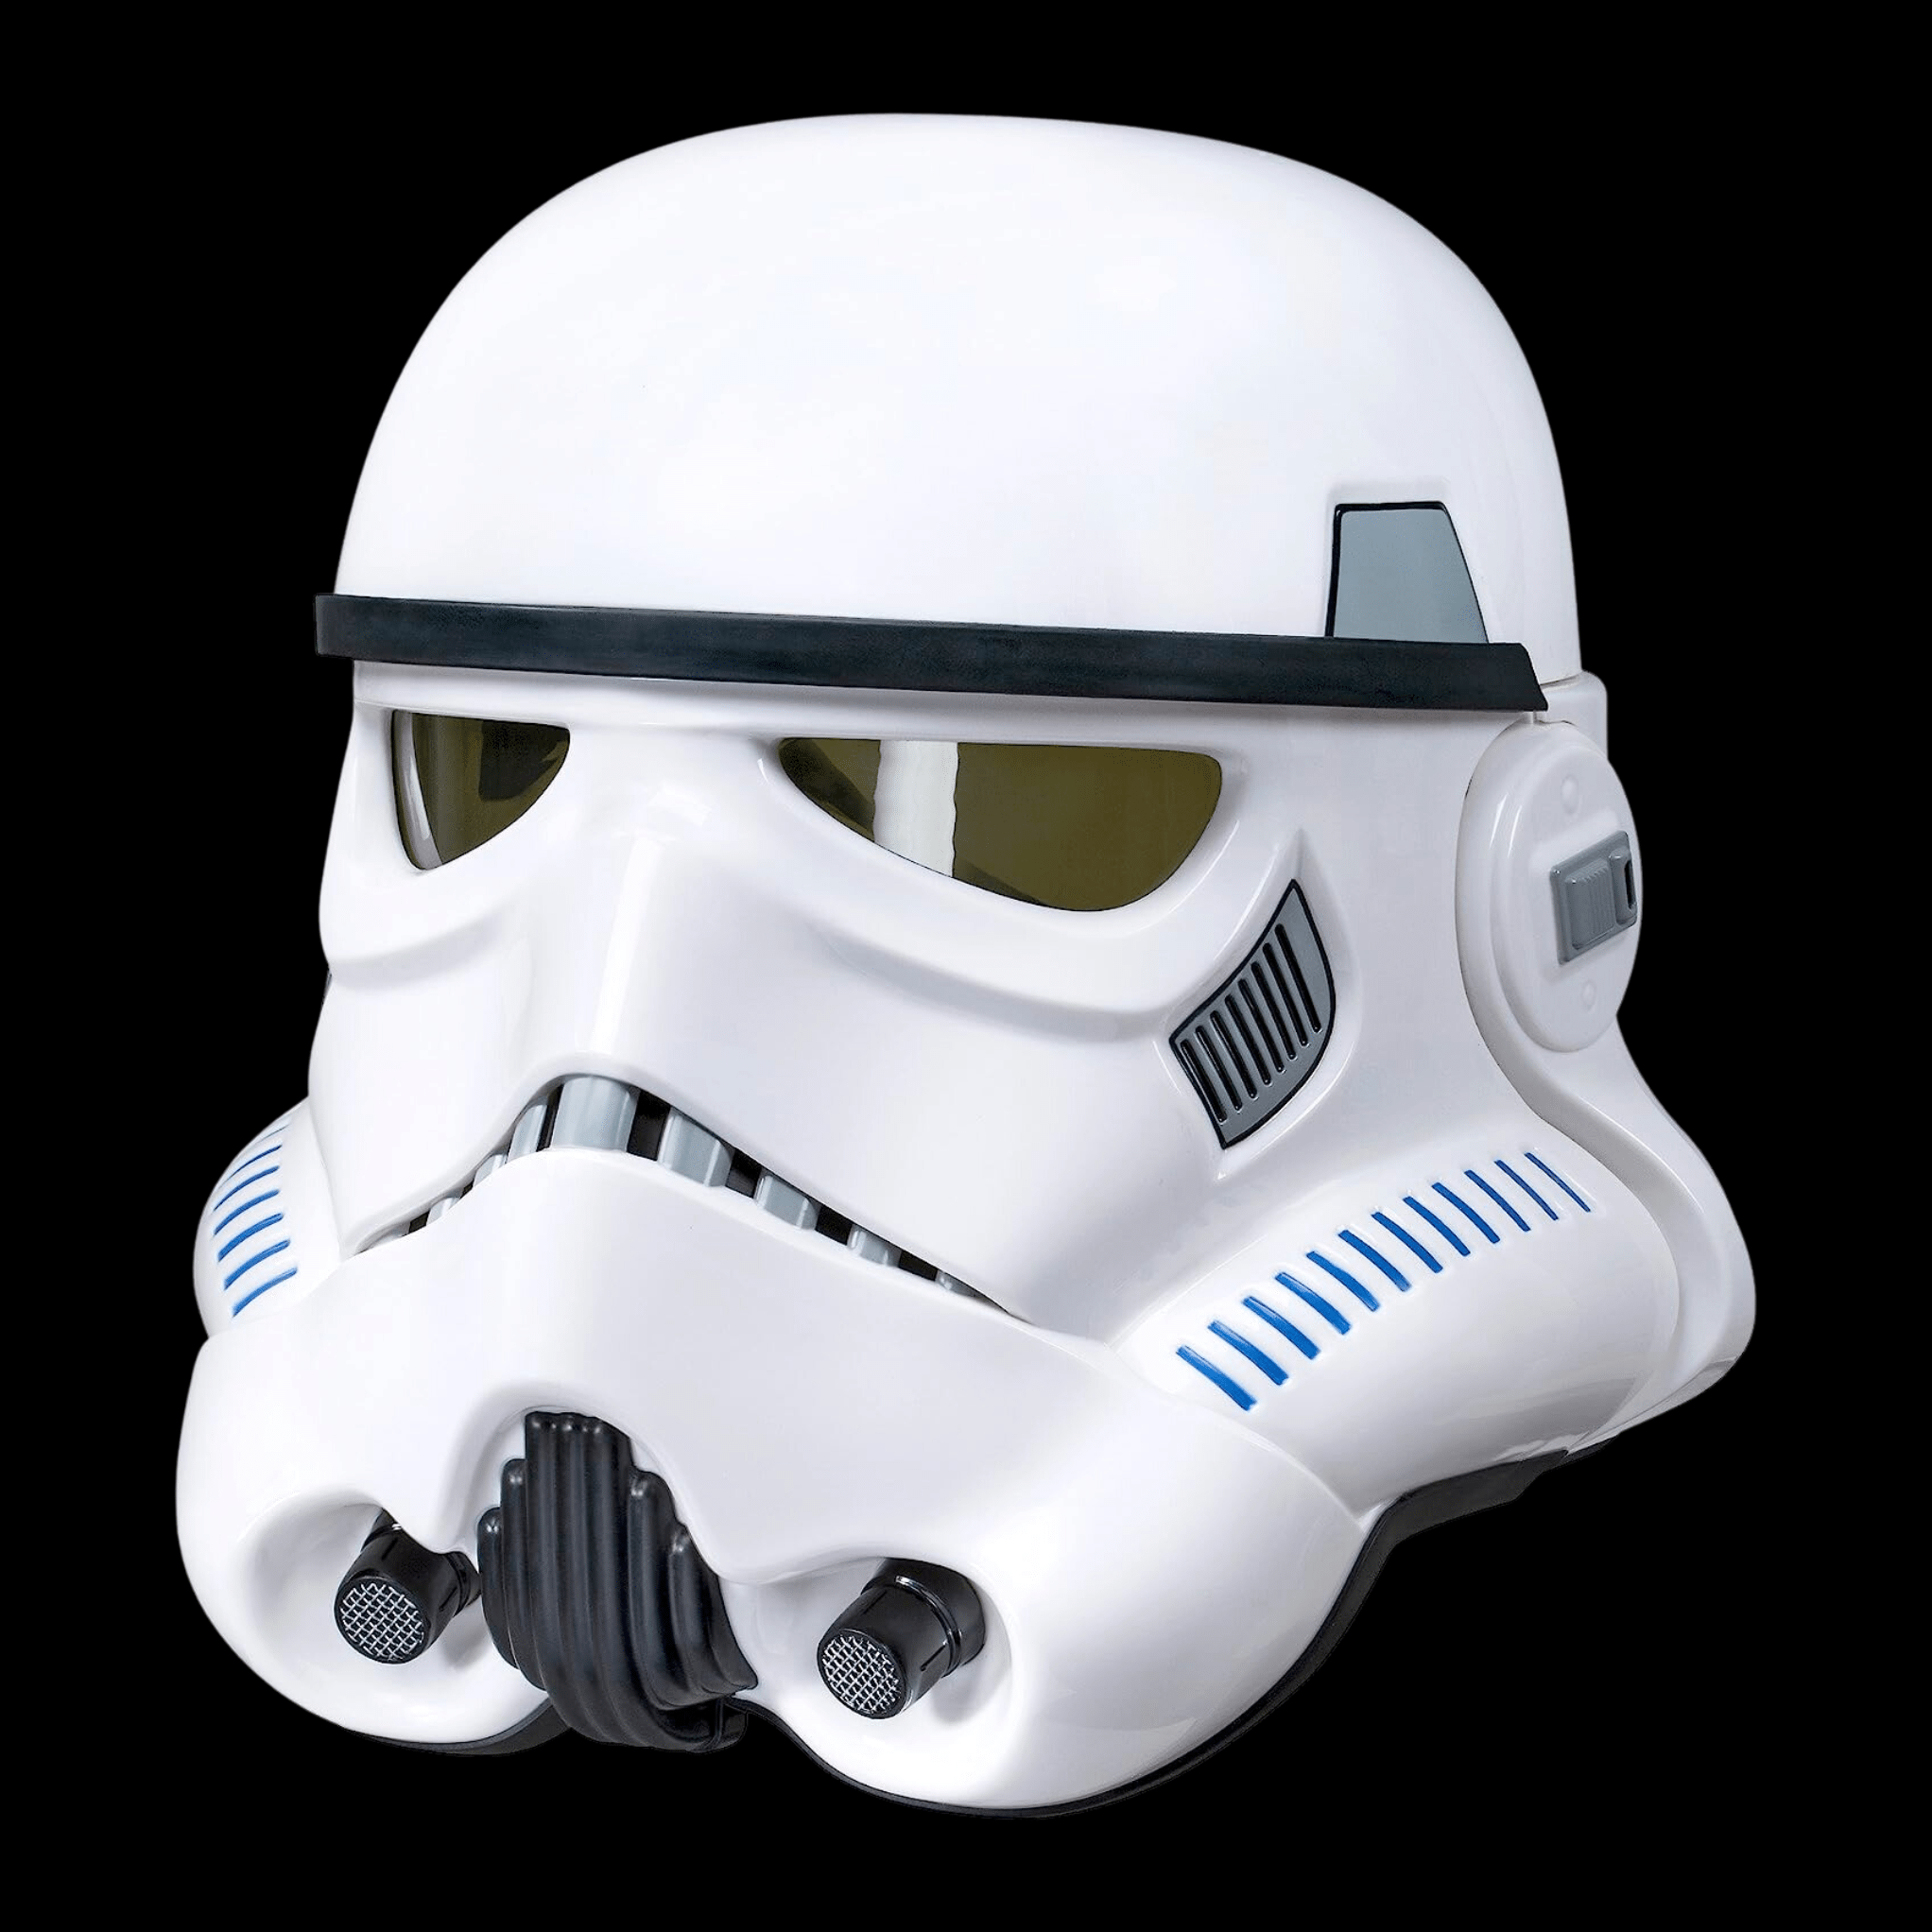 Hasbro Star Wars The Black Series Rogue One Imperial Stormtrooper Premium Electronic Helmet